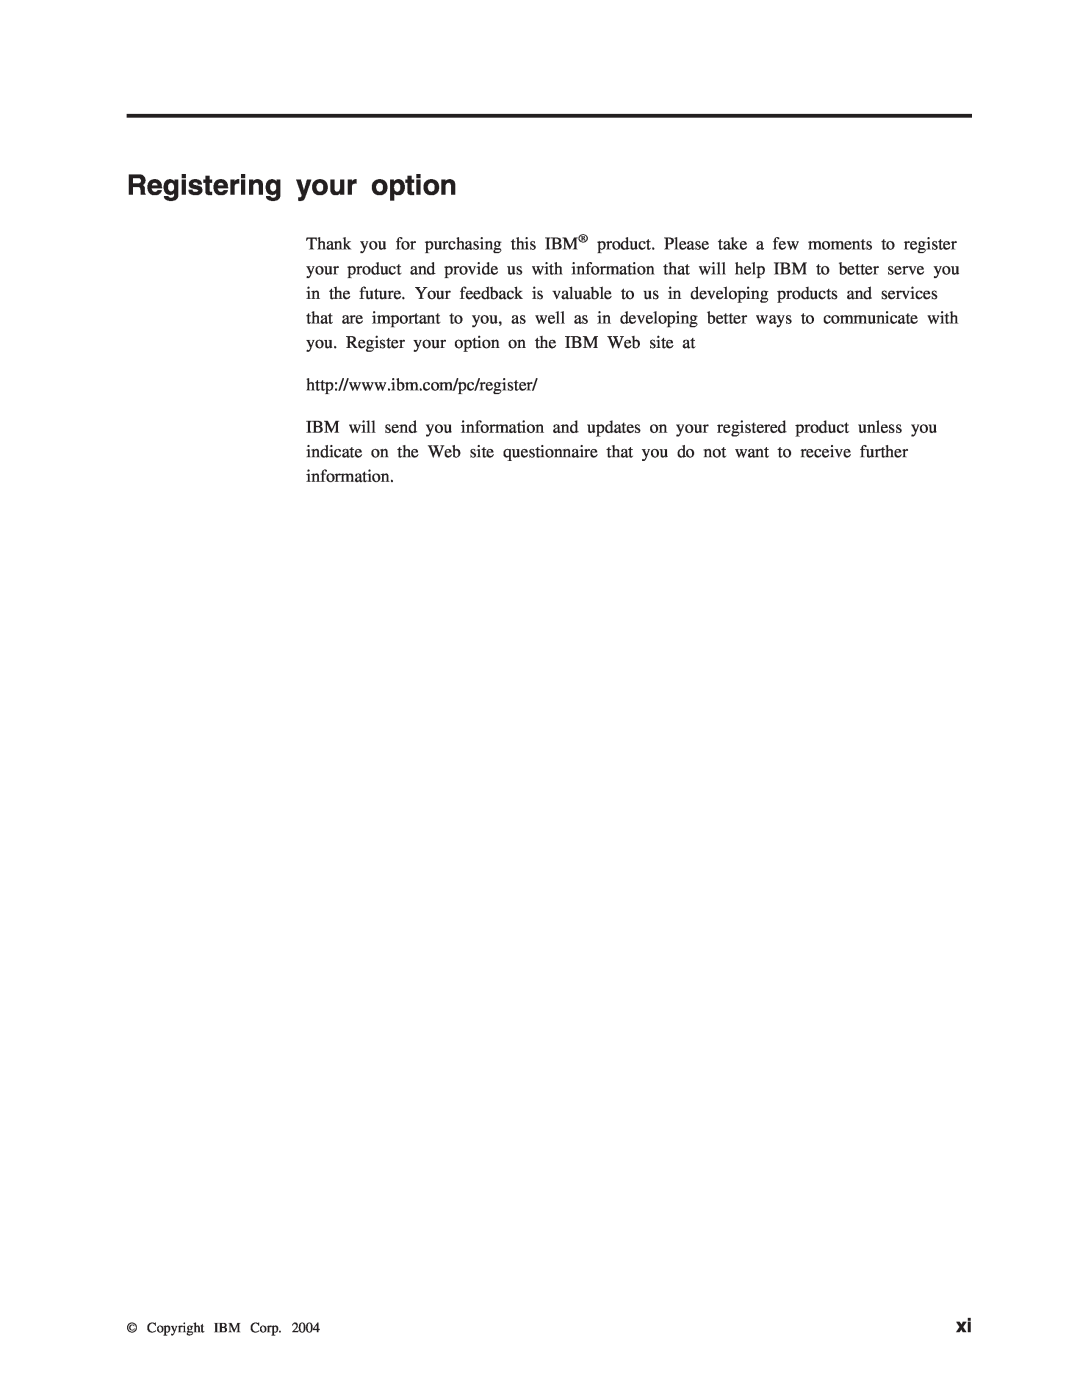 IBM M400 manual Registering your option 